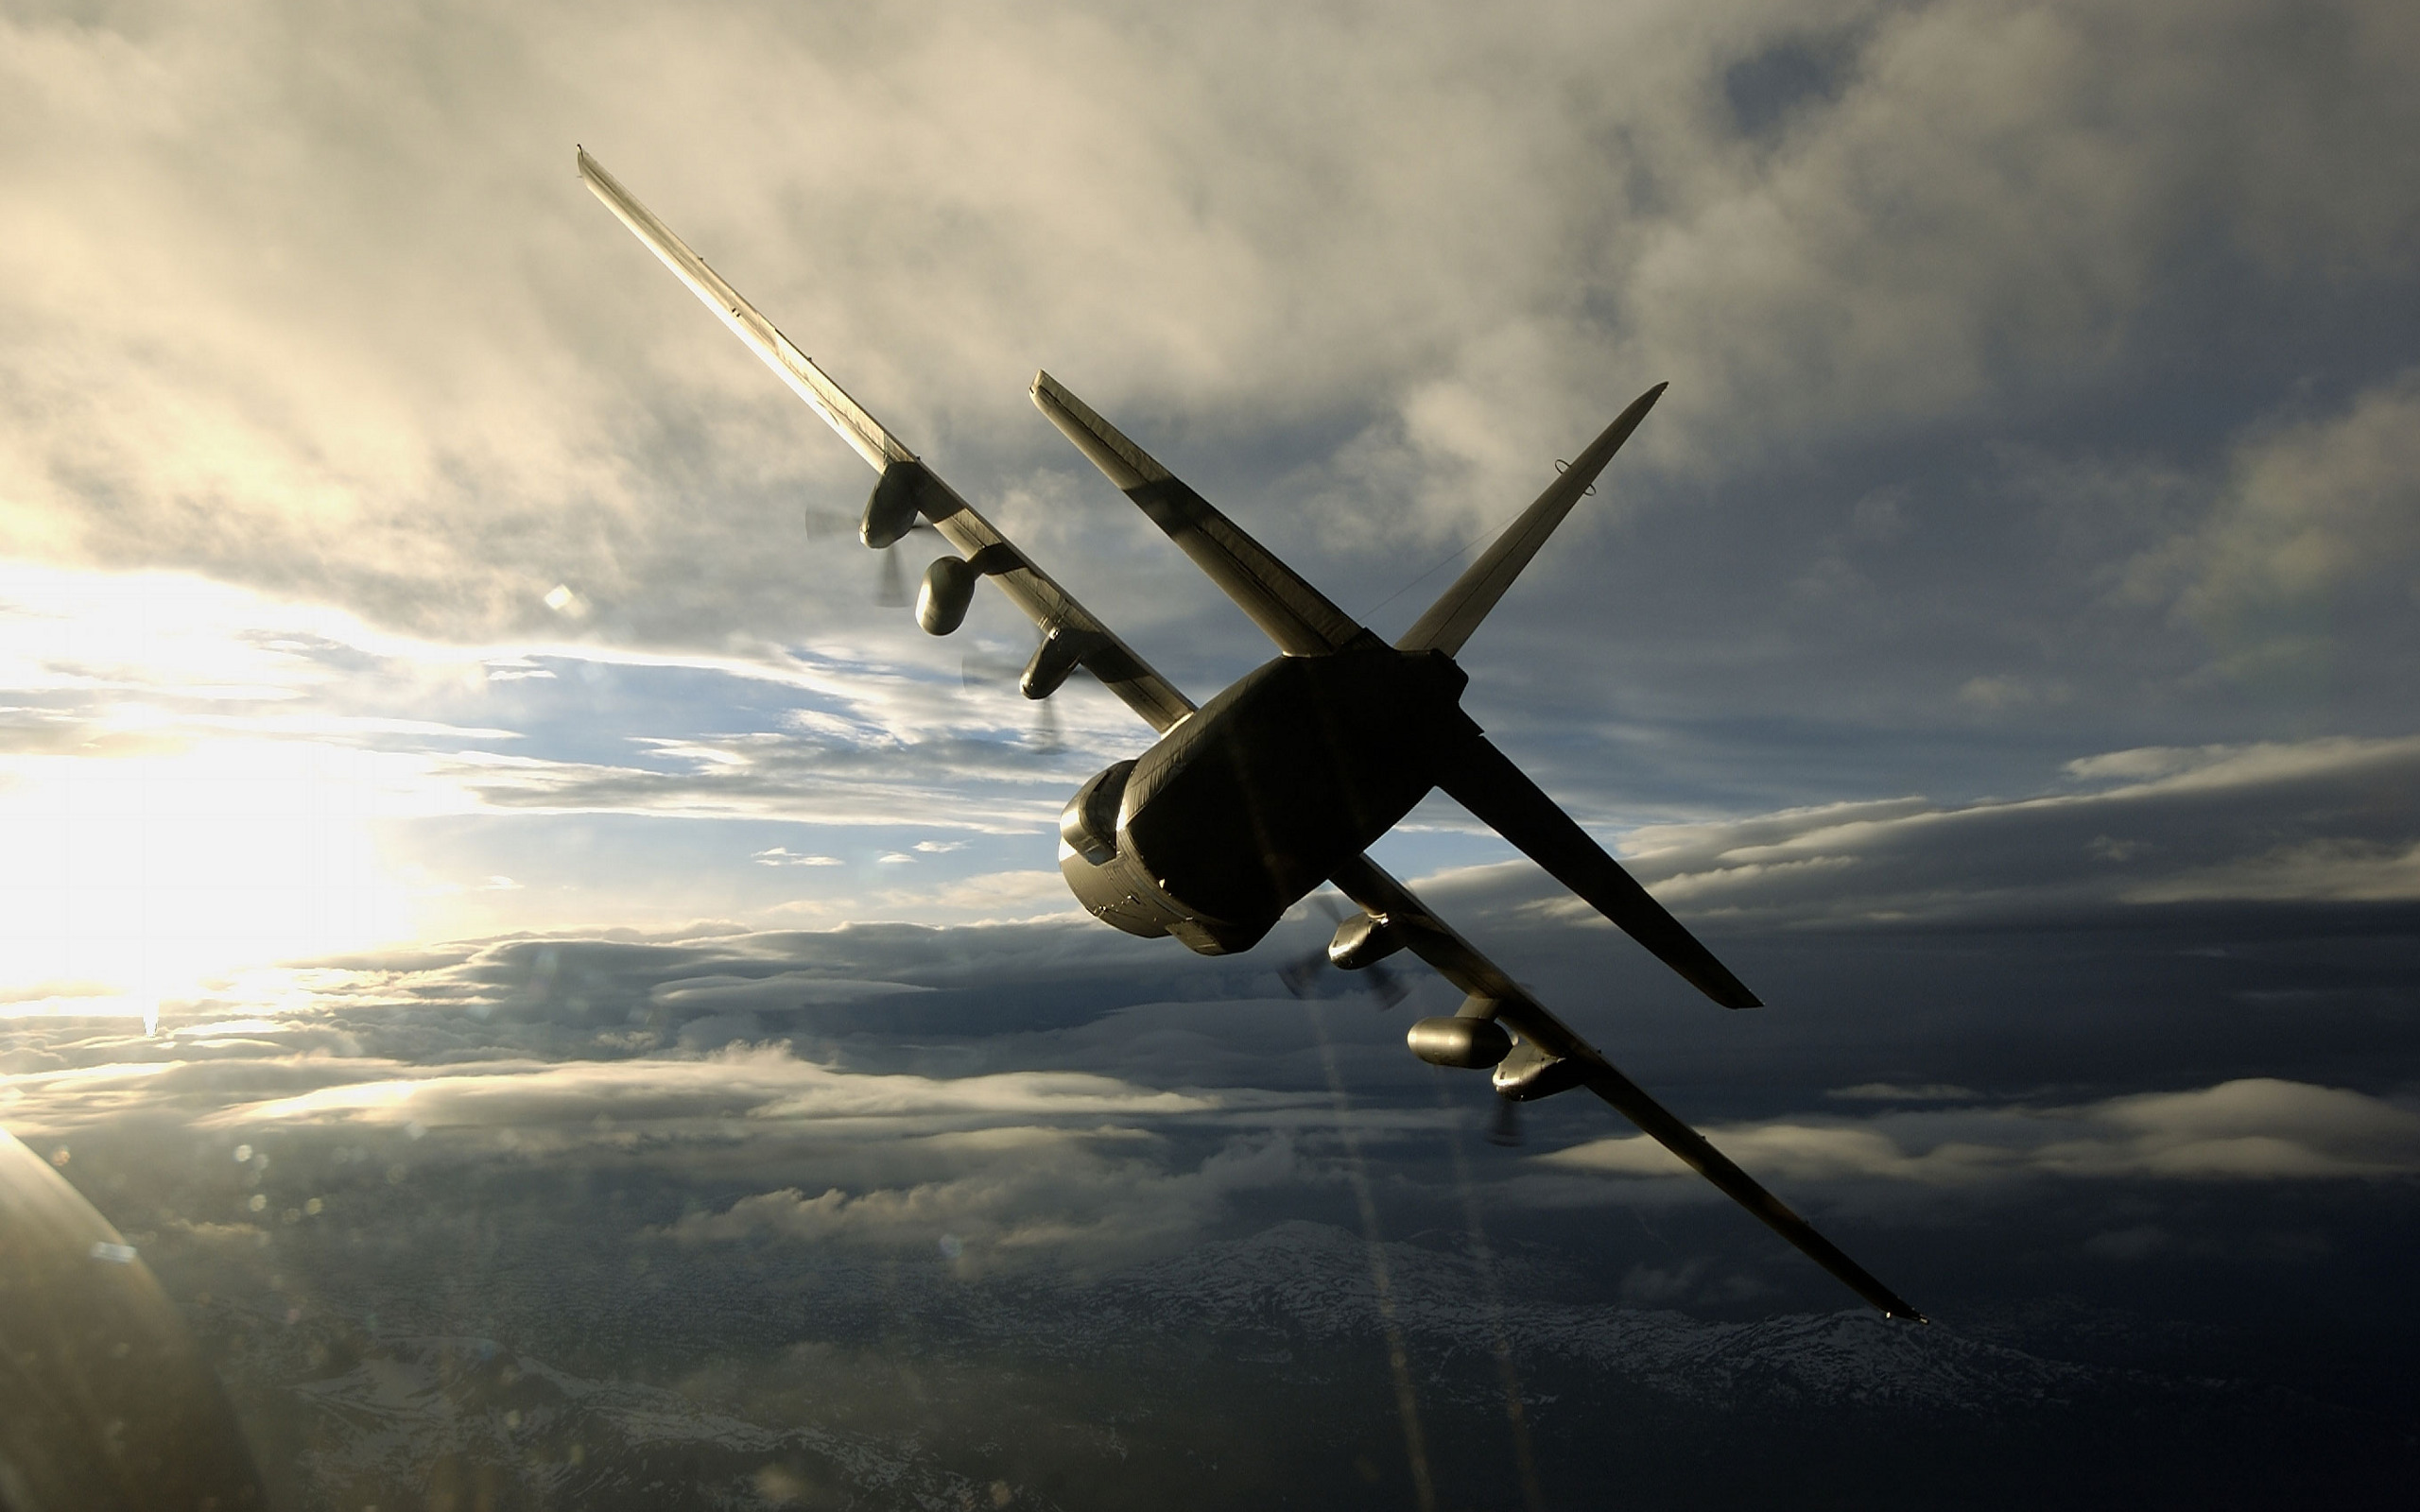 20 Lockheed C-130 Hercules HD Wallpapers | Backgrounds - Wallpaper ...